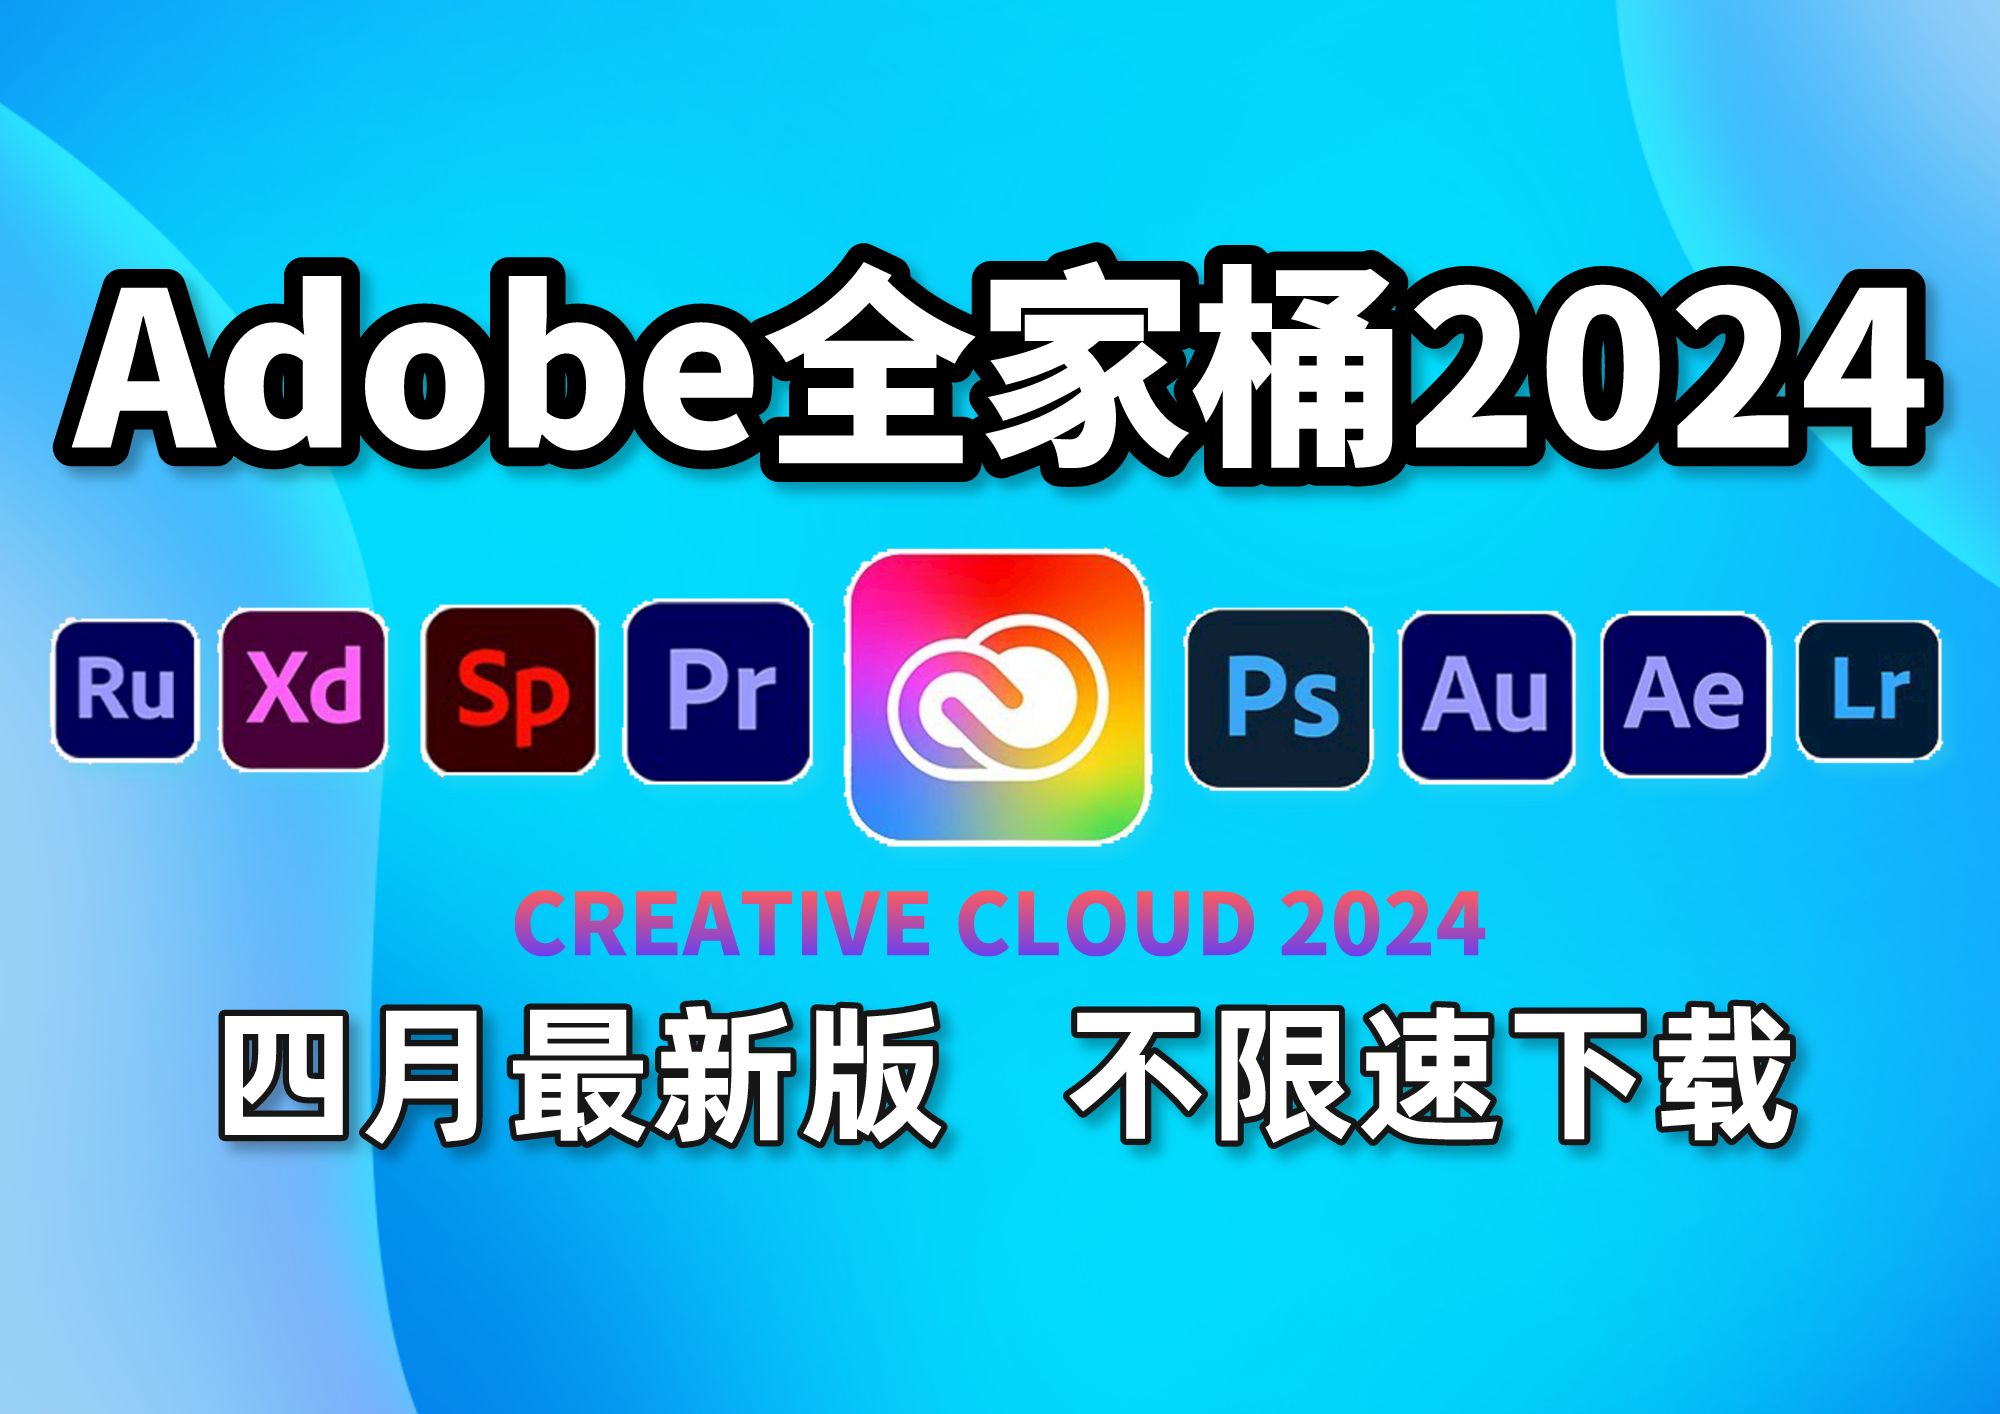 【Adobe2024全家桶】四月最新版 安装教程（附安装包）！PR/AE/Ai/AU/C4D等！永久使用，不限速下载！支持Win+Mac 视频剪辑/影视后期